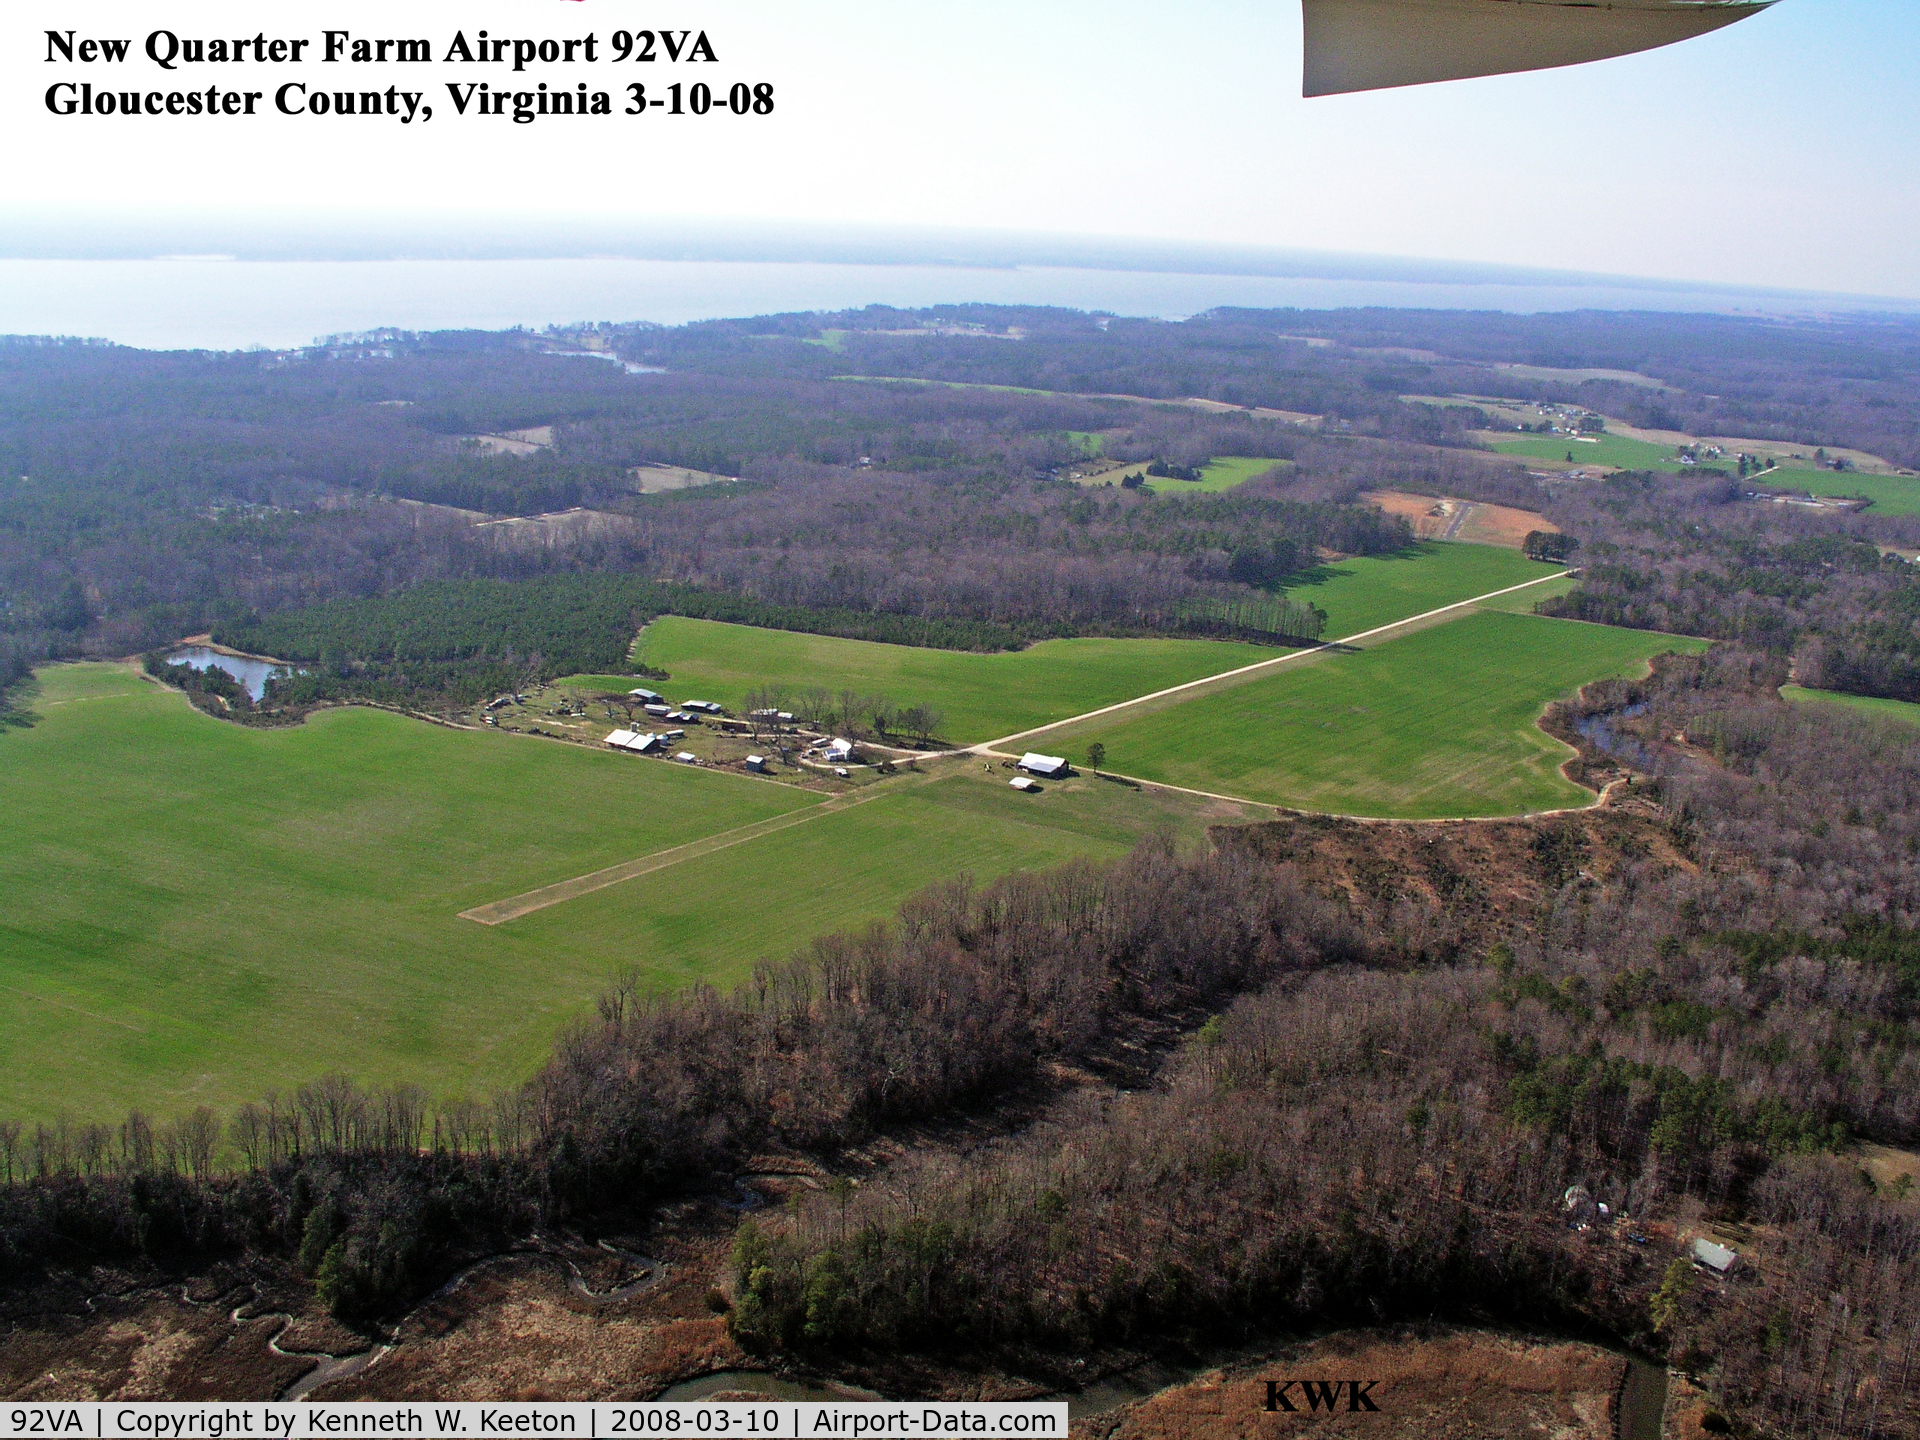 New Quarter Farm Airport (92VA) - New Quarter Farm Airport 92VA Gloucester County, Virginia Photo by Kenneth W. Keeton 3-10-08